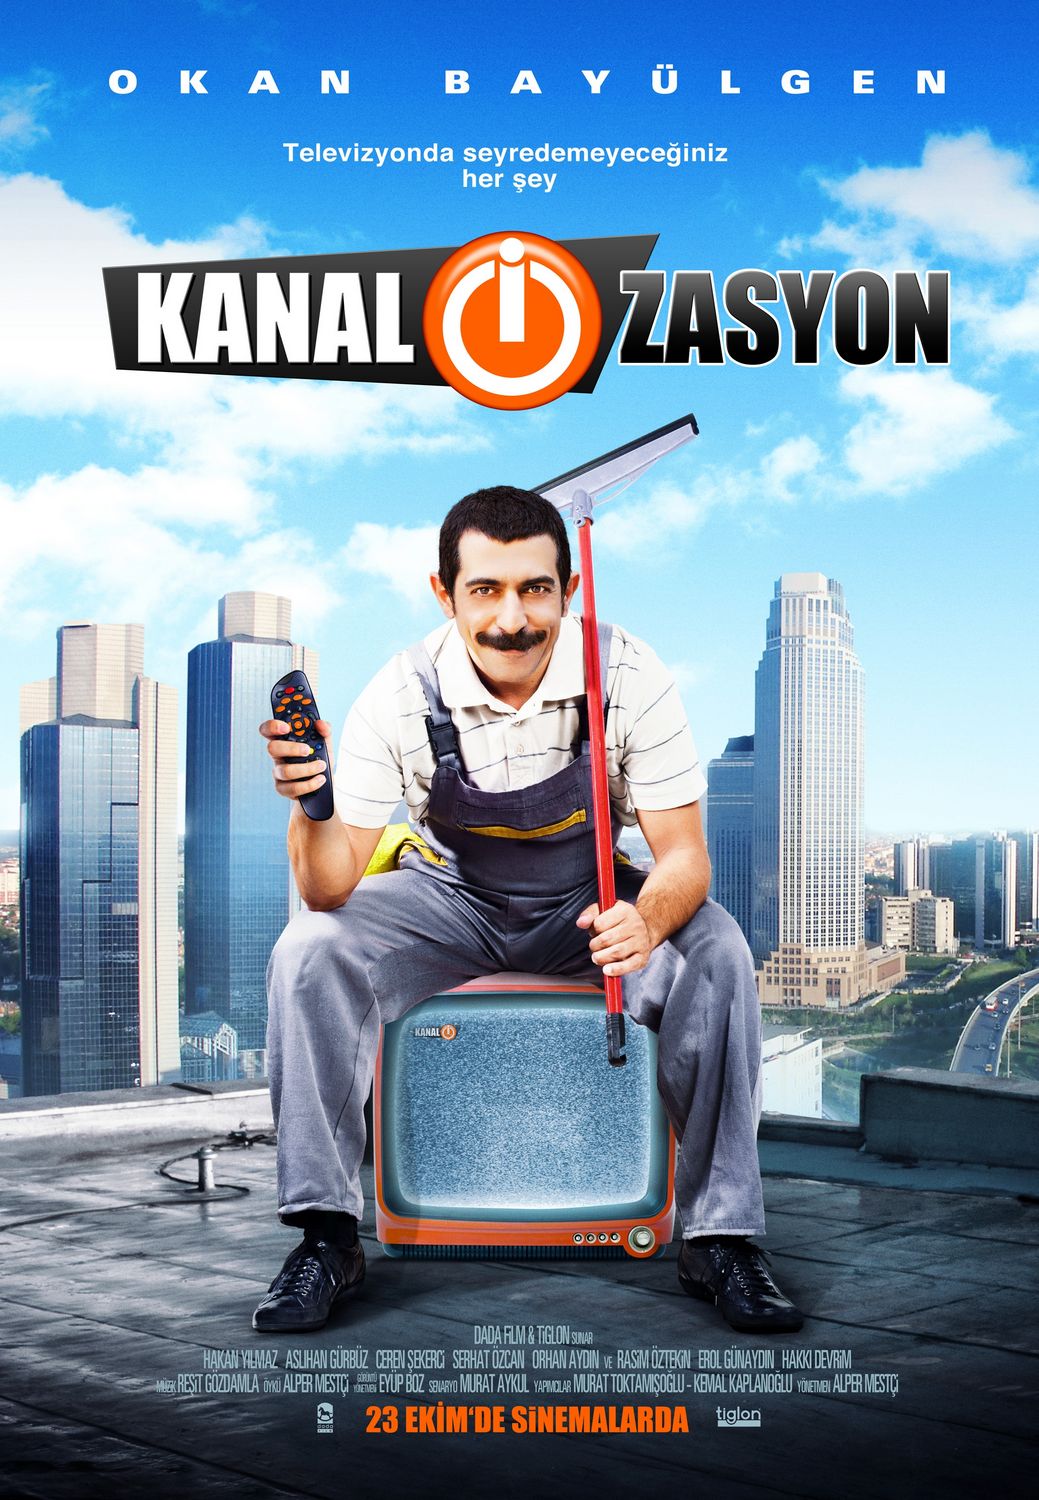 Extra Large Movie Poster Image for Kanal-i-zasyon 